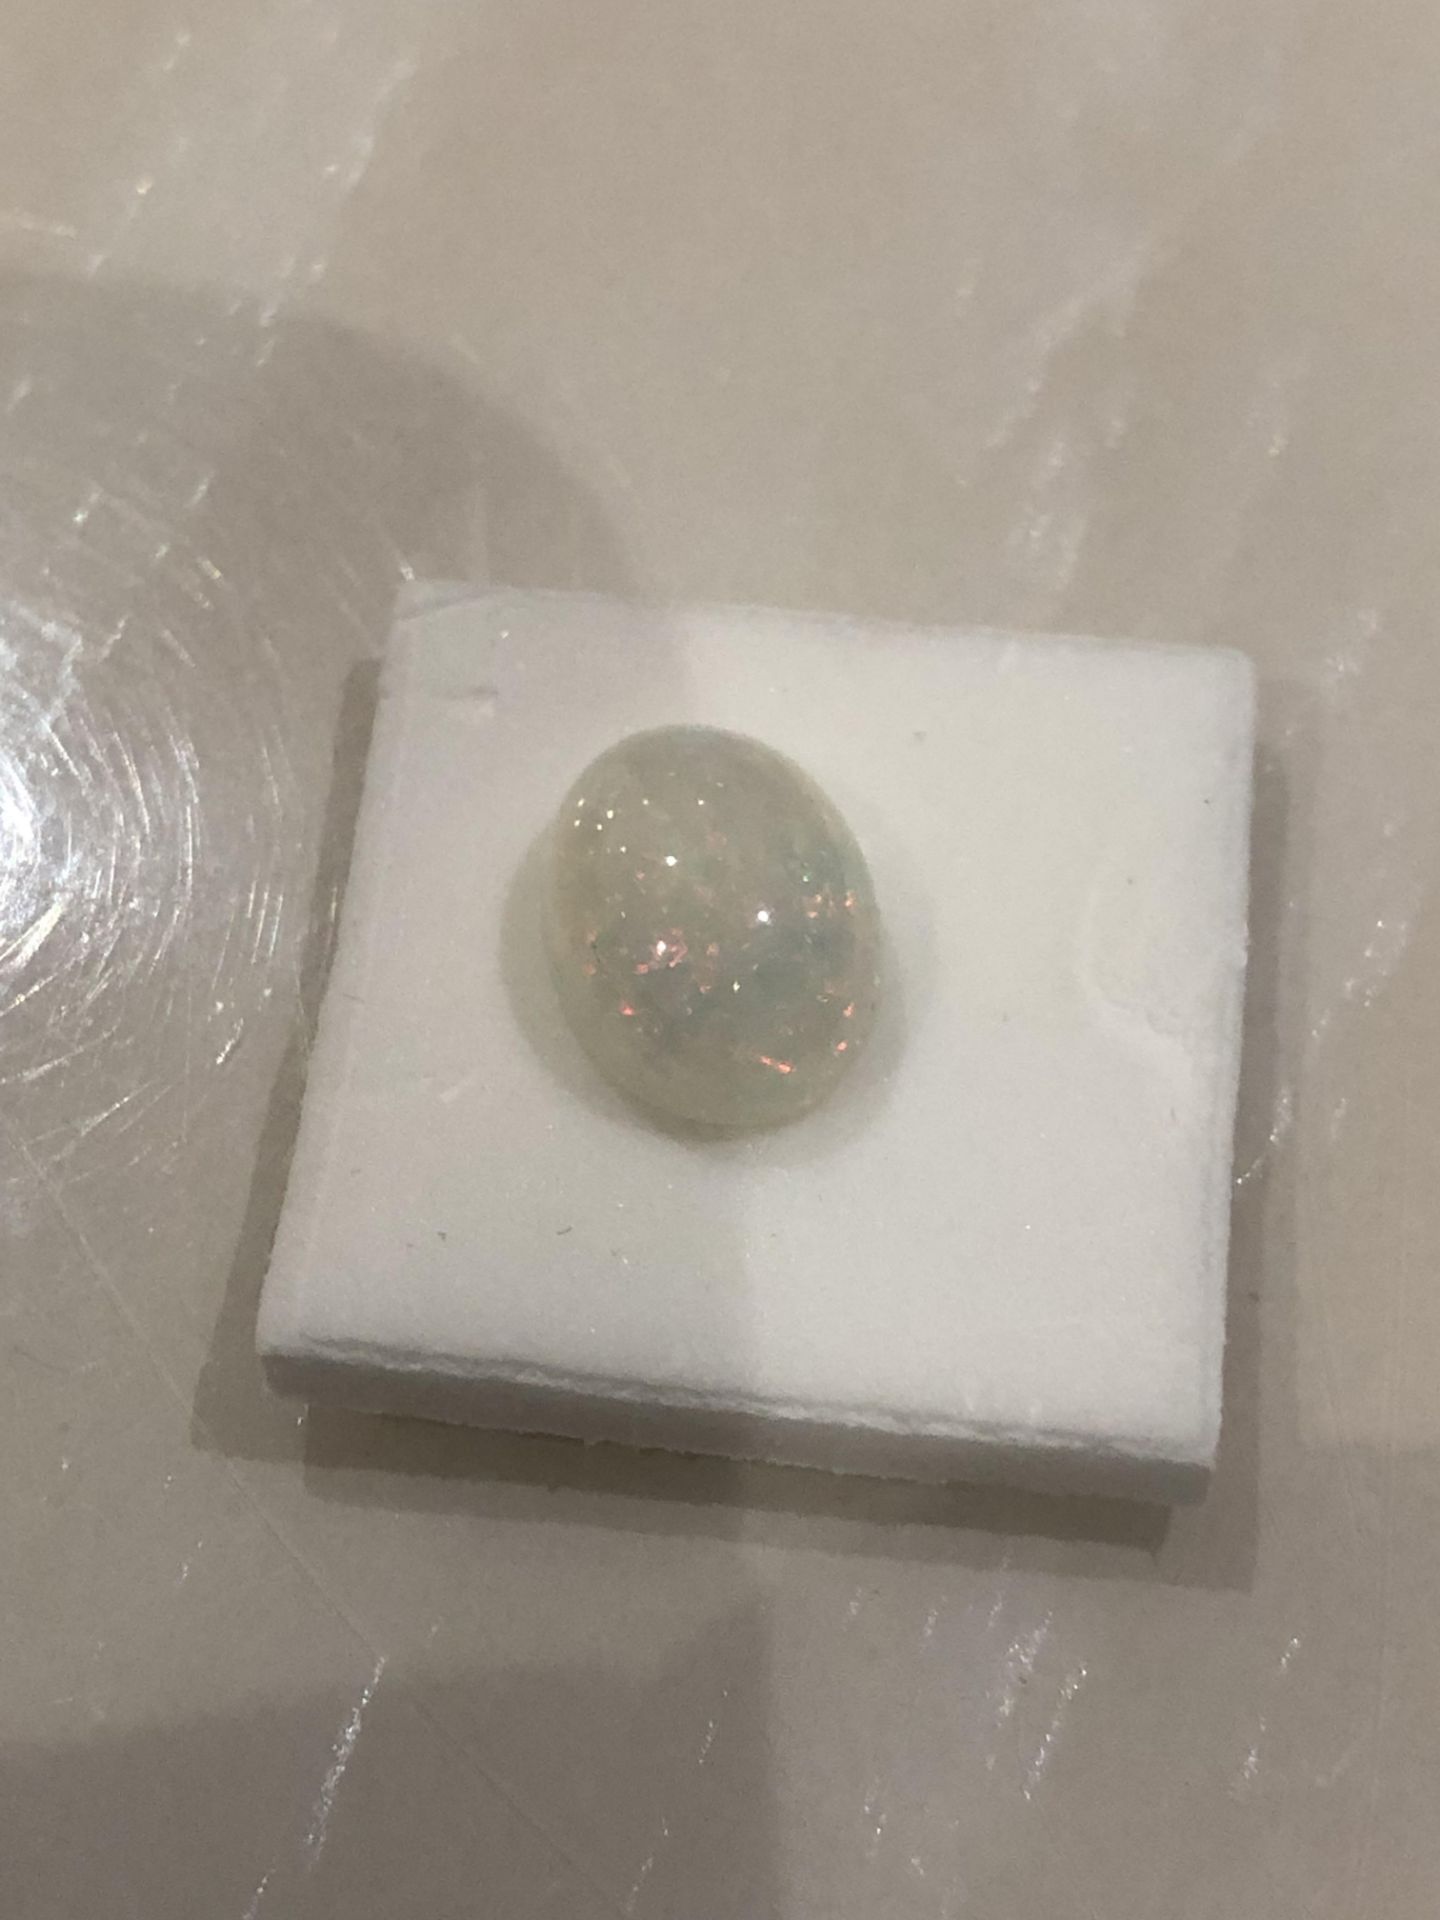 3.14ct natural loose opal - Image 2 of 4